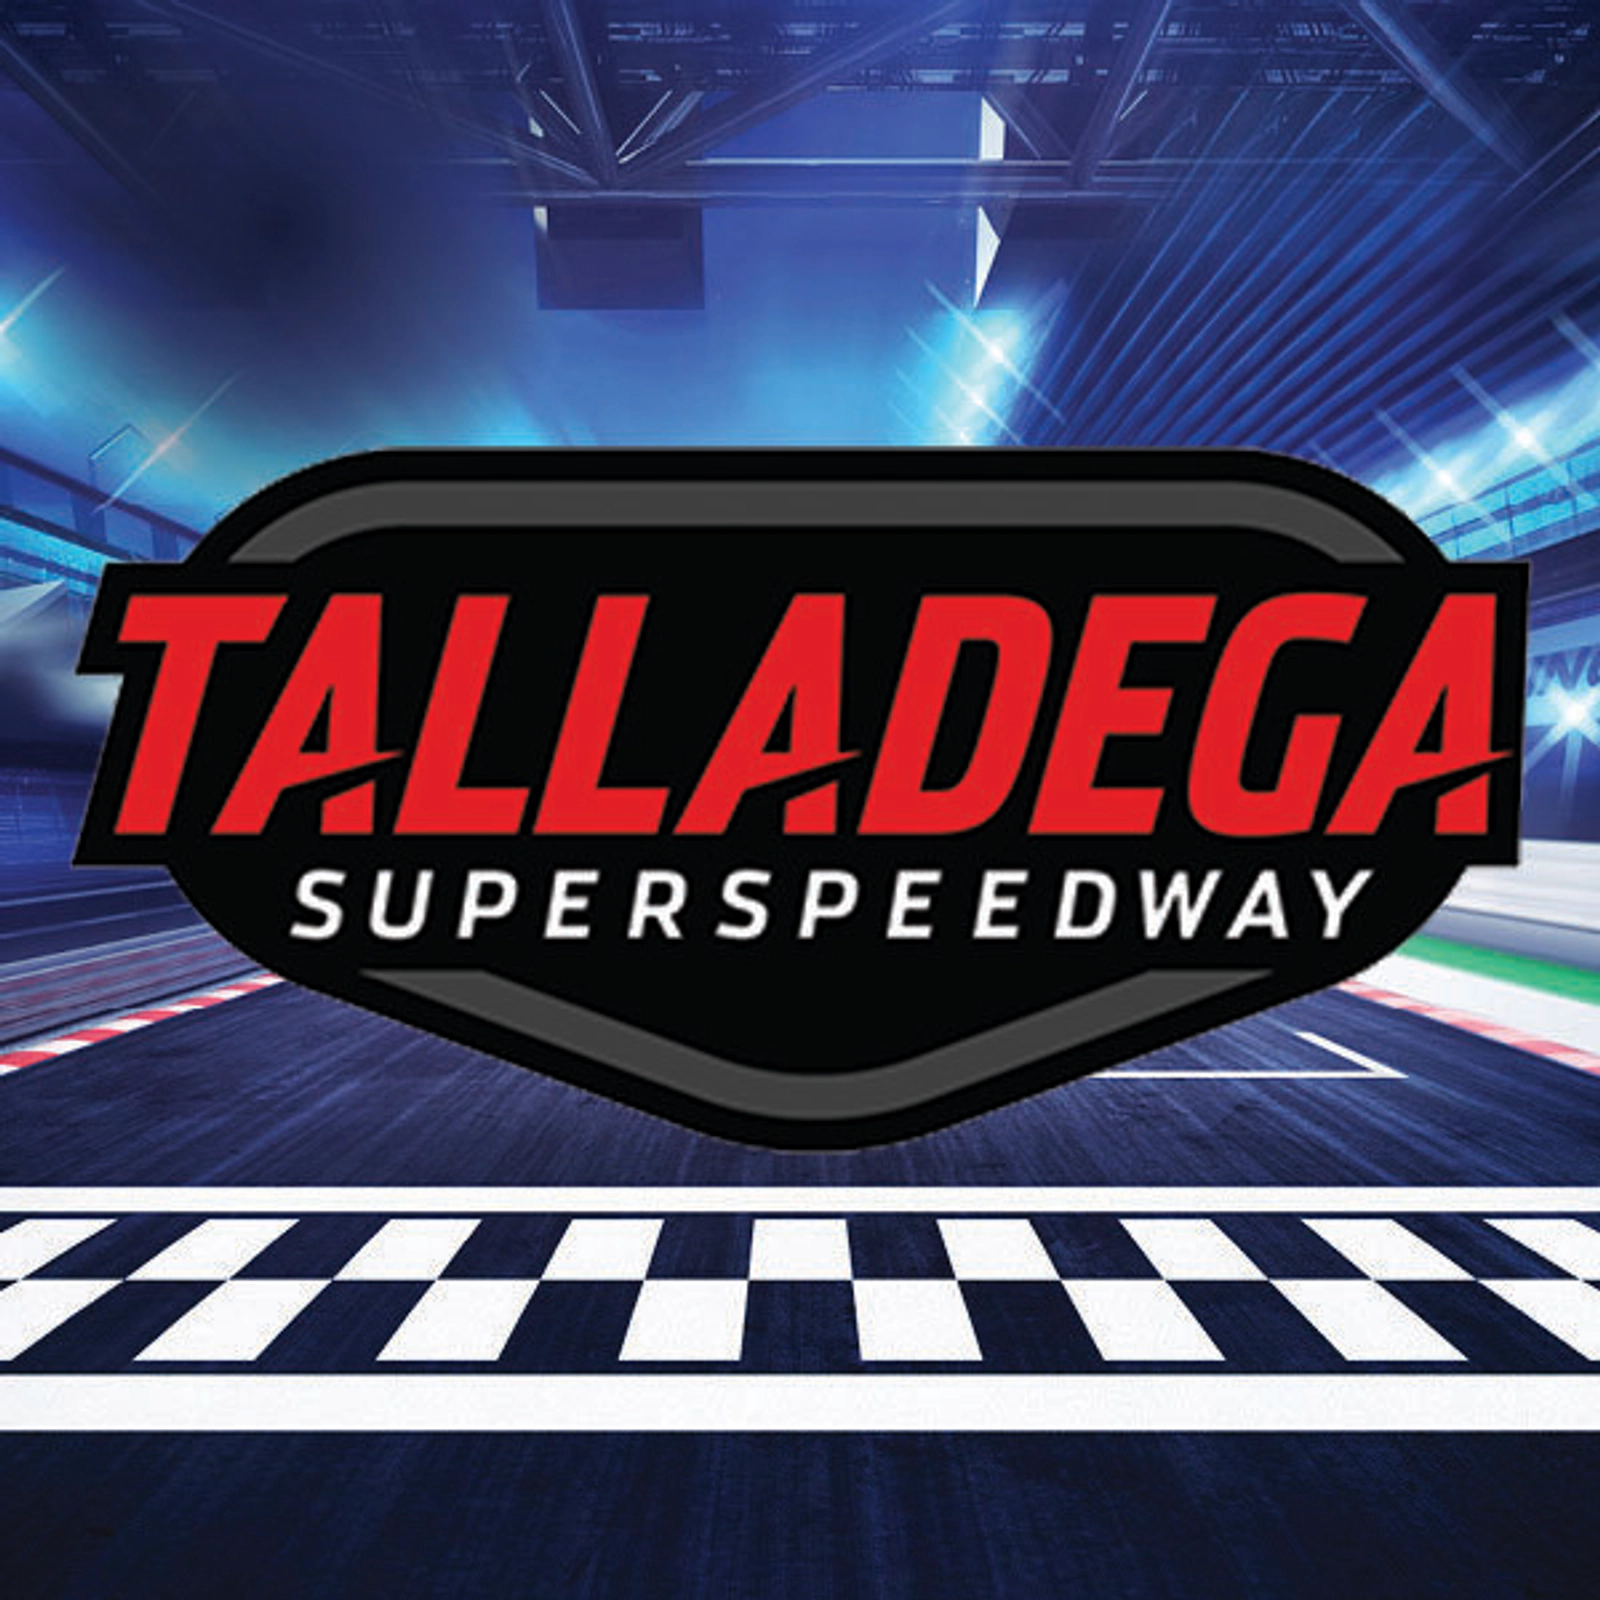 Talladega Superspeedway Garage Experience Passes!